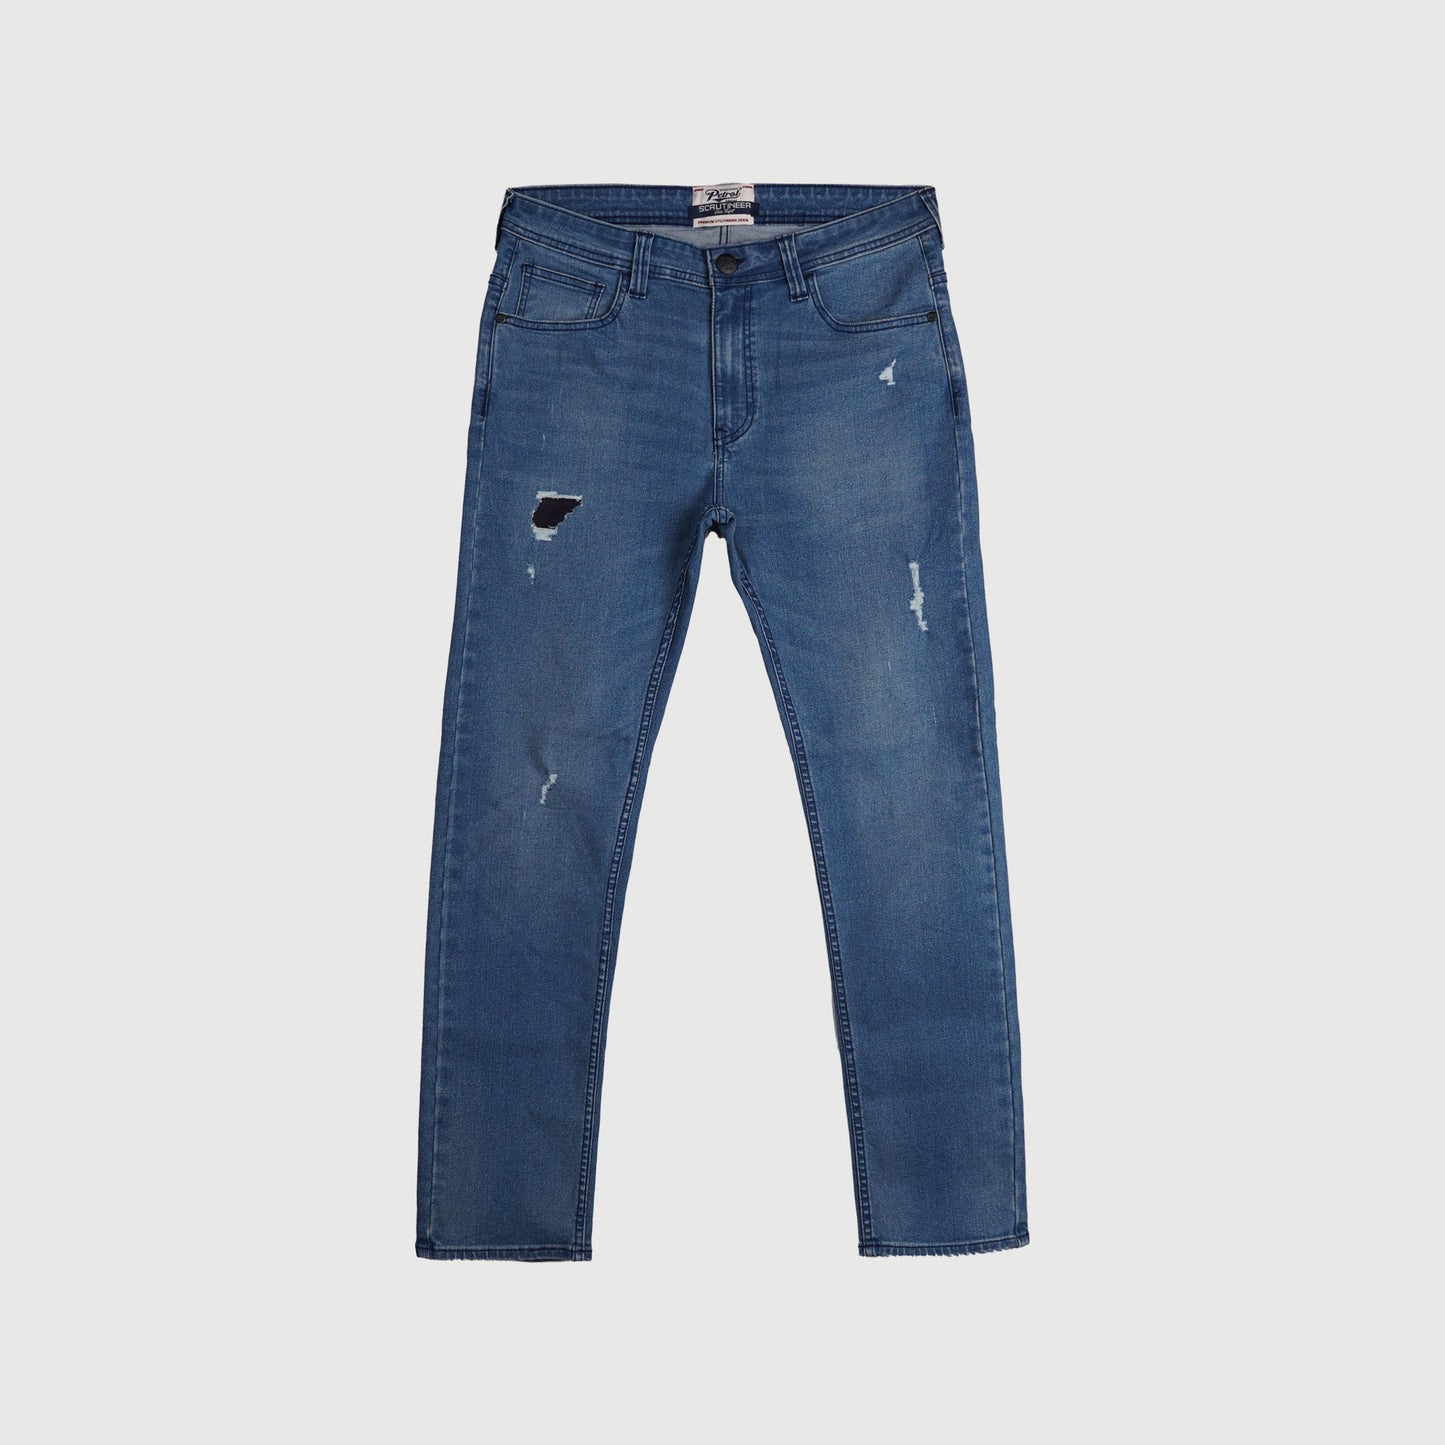 Petrol Basic Denim Pants for Men Skin Tight Fitting Mid Rise Trendy fashion Casual Bottoms Medium Shade Jeans for Men 149877 (Medium Shade)